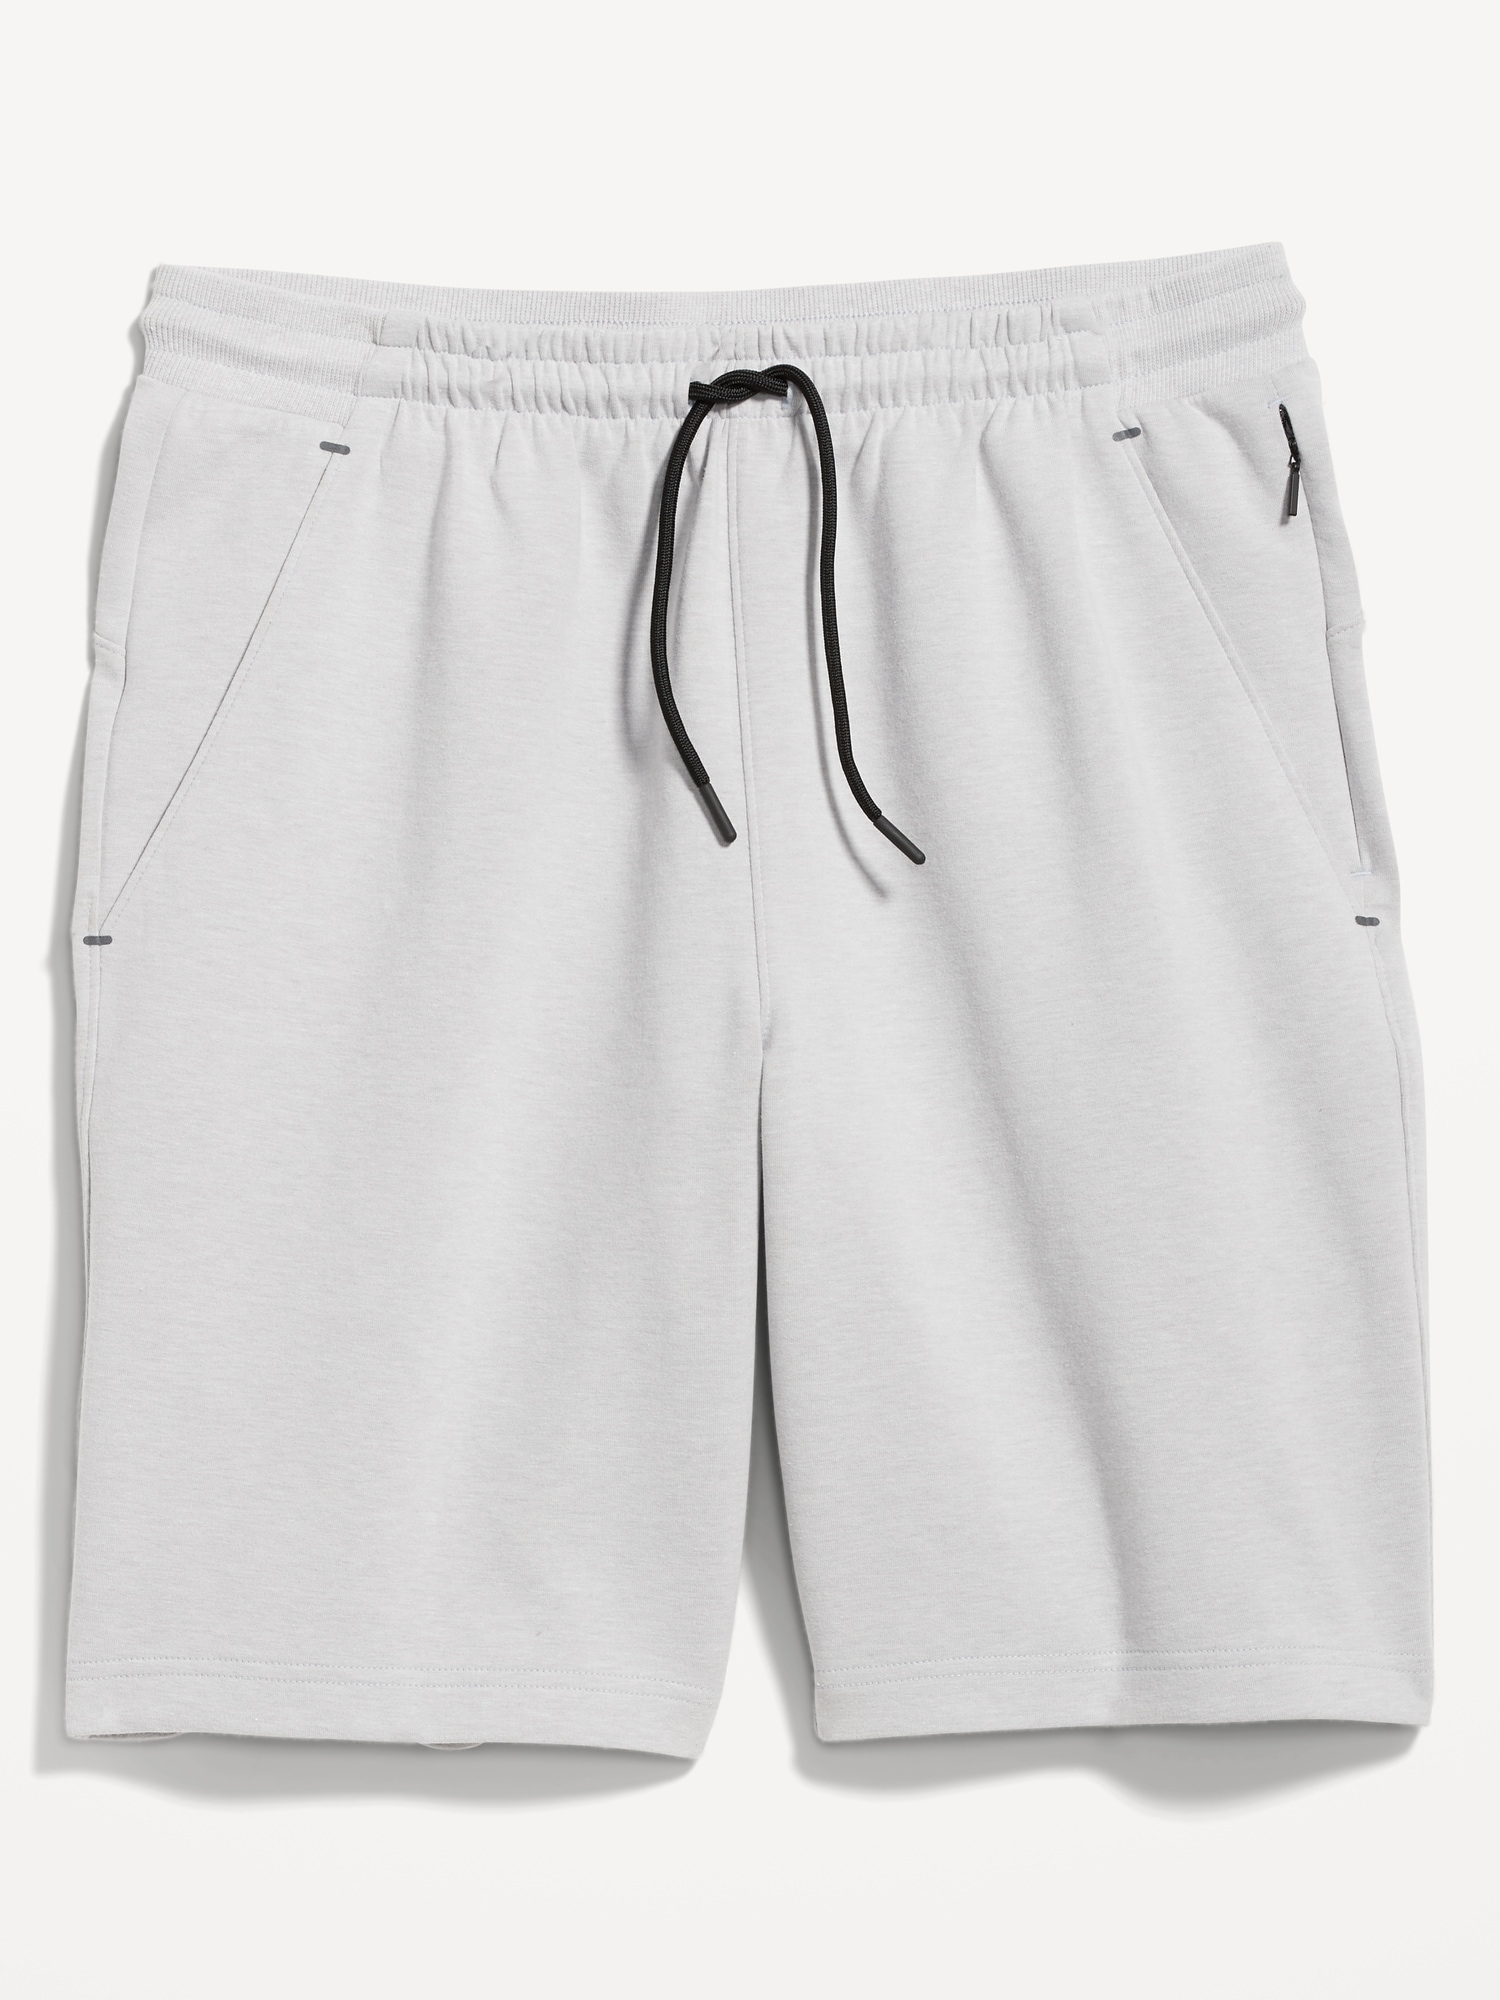 Dynamic Fleece Shorts -- 9-inch inseam